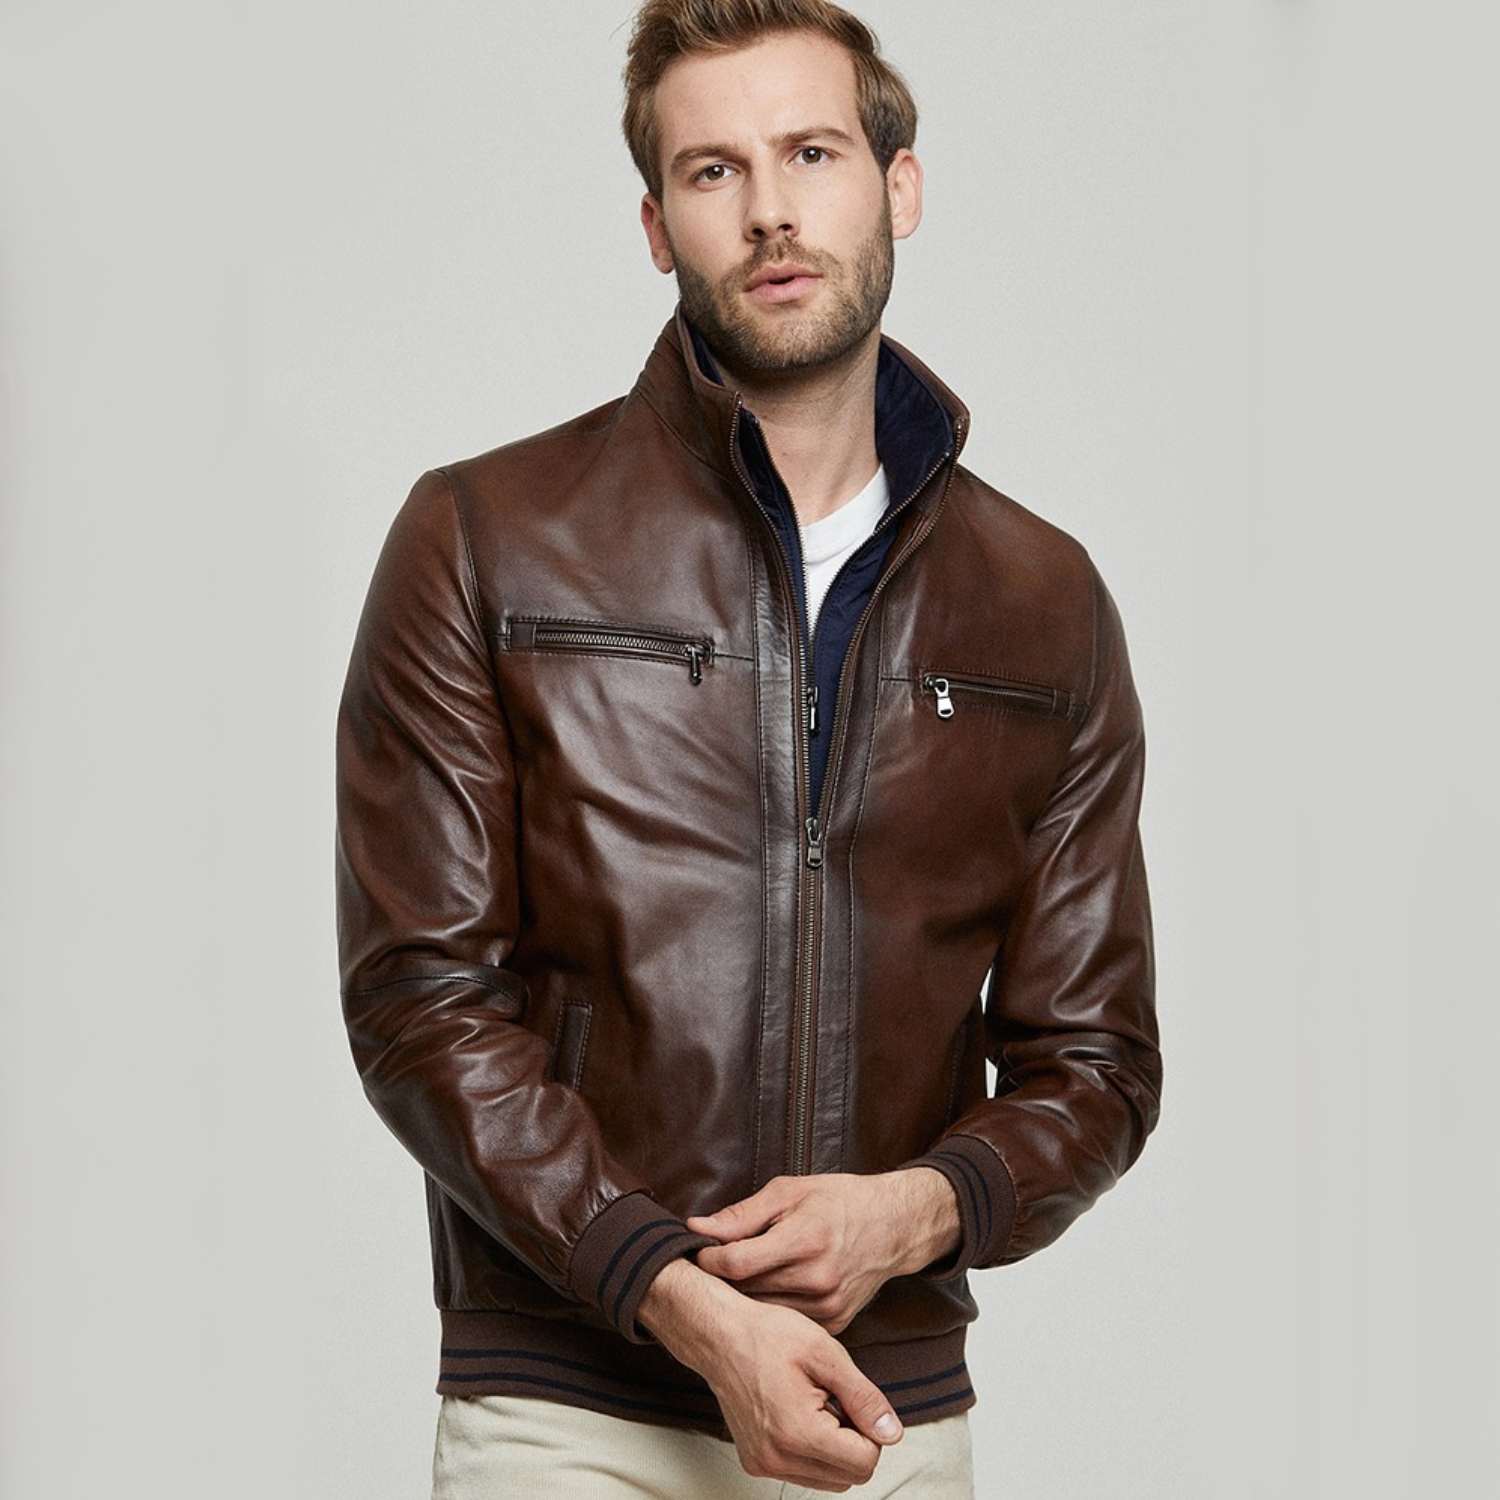 The 25 Best Men's Leather Jackets of 2022 | GearMoose